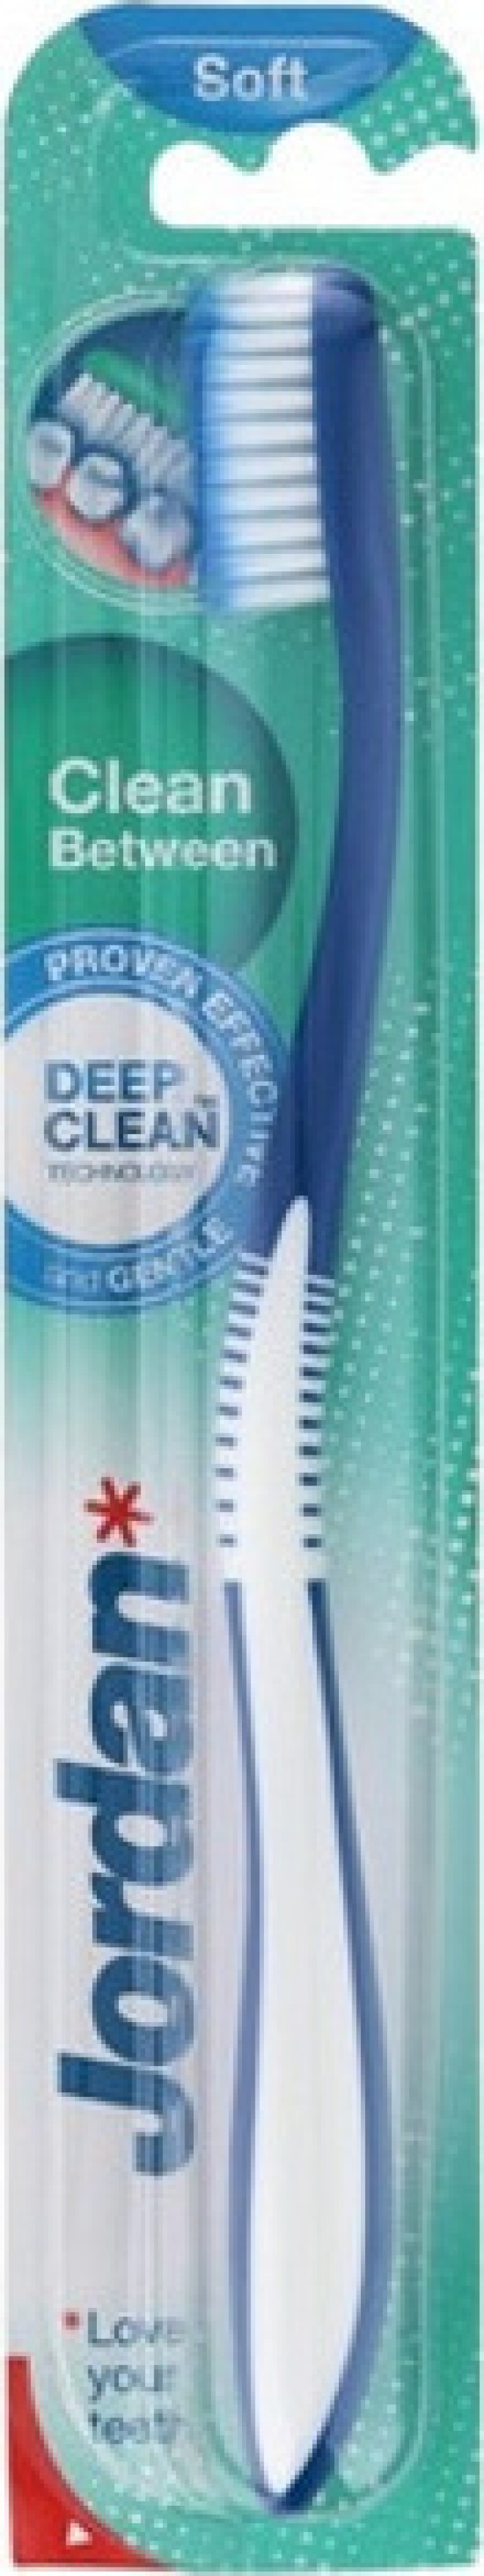 Jordan Clean Between Soft Οδοντόβουρτσα Μαλακή για Βαθύ Καθαρισμό των Δοντιών 1 Τεμάχιο